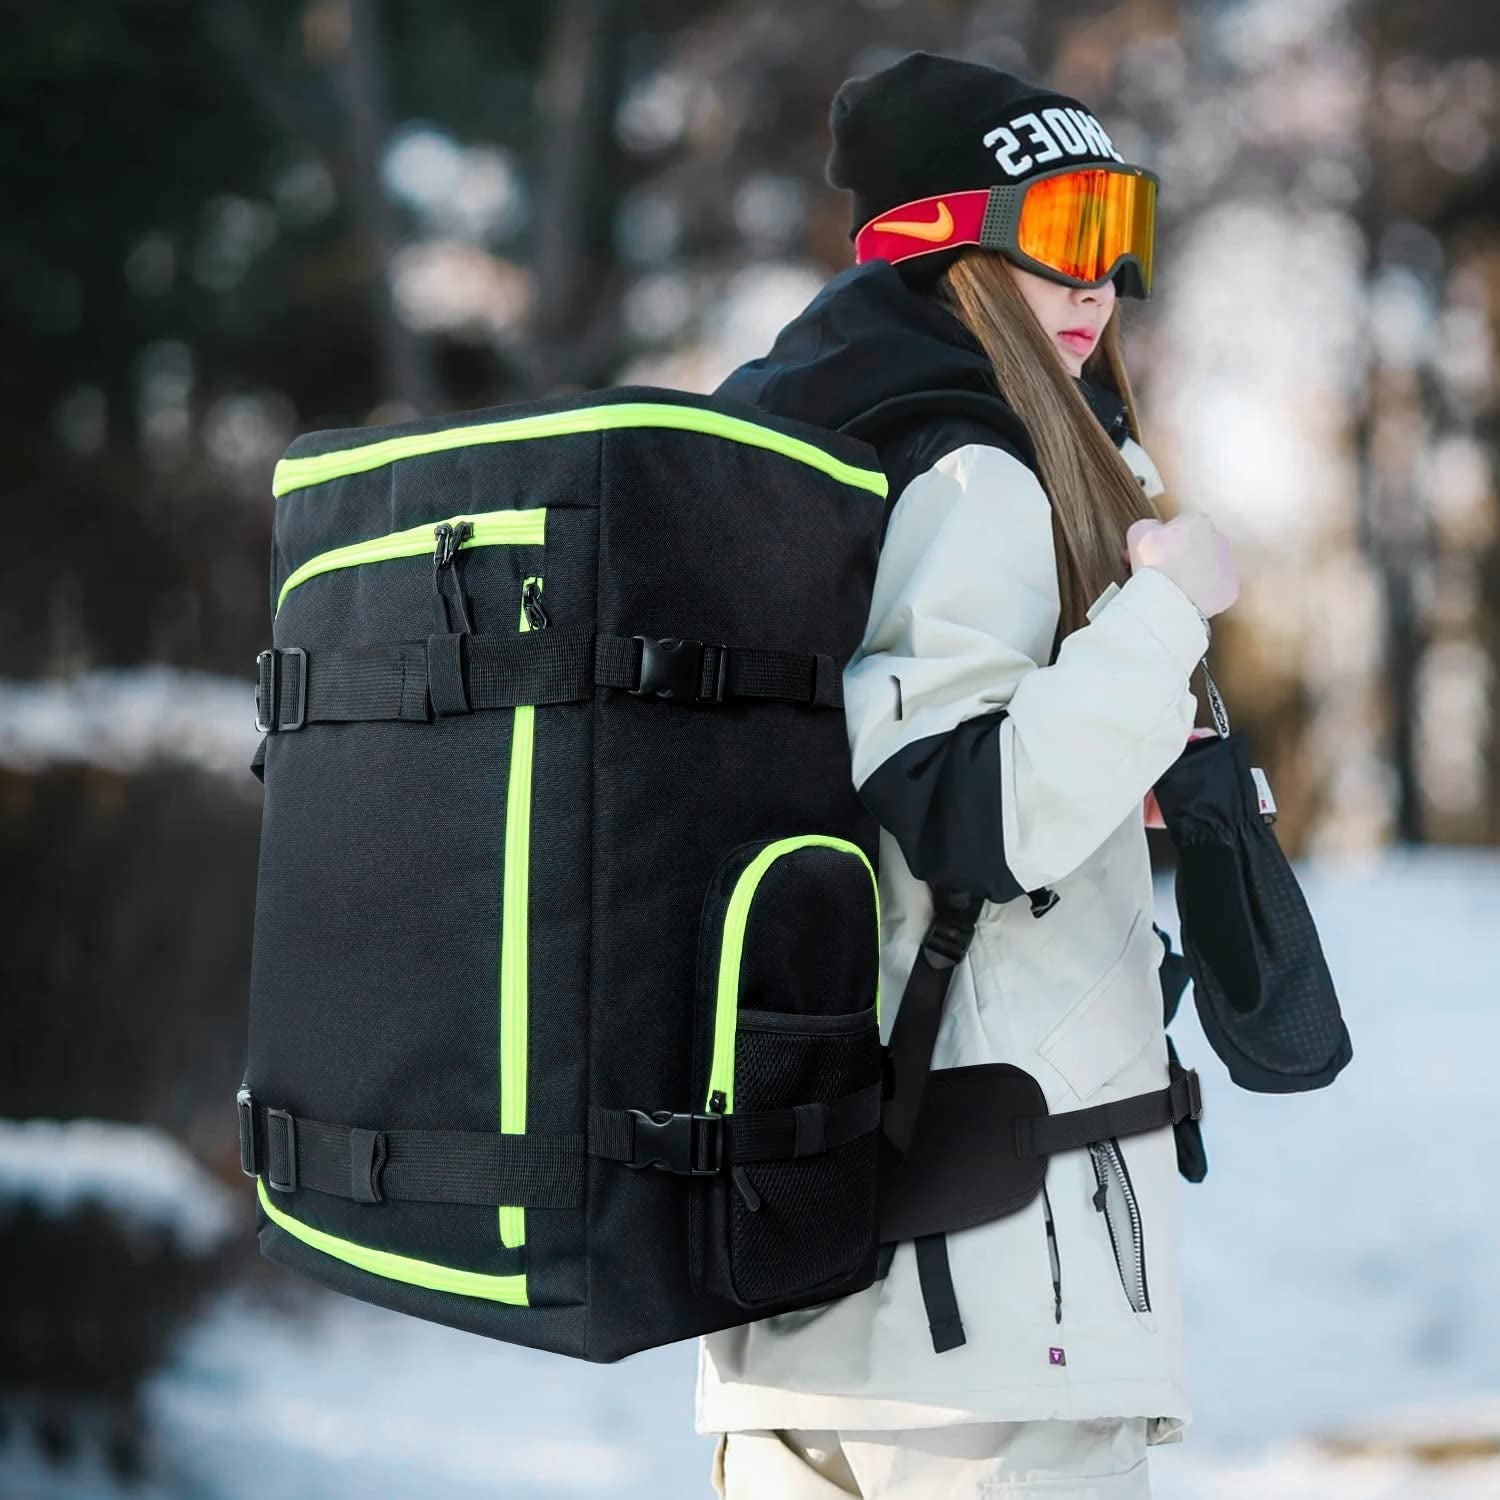 Bevalsa 60L Ski Boot Bag Backpack, 900D Waterproof Snowboard Boot Bag, Skis & Snowboard Combo Bag, Ski Helmet Bag Travel Bag for Ski Helmet, Goggles, Gloves, Skis, Snowboard & Accessories